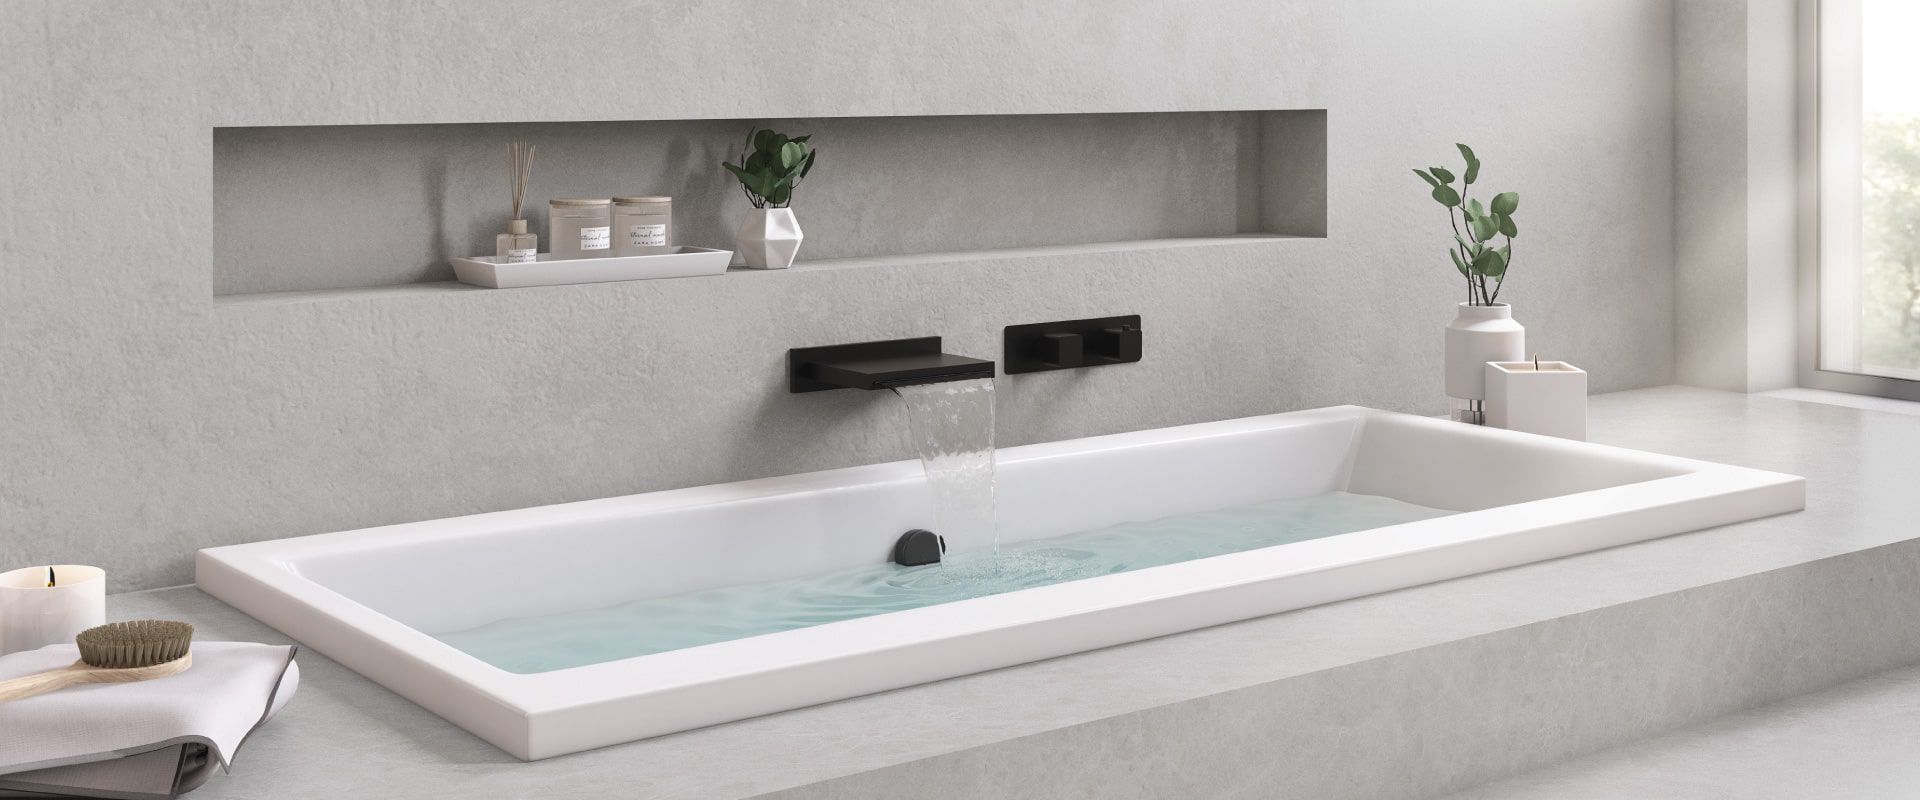 RM Living Interior Design Modern Bathroom Sink by Isenberg Isenberg5